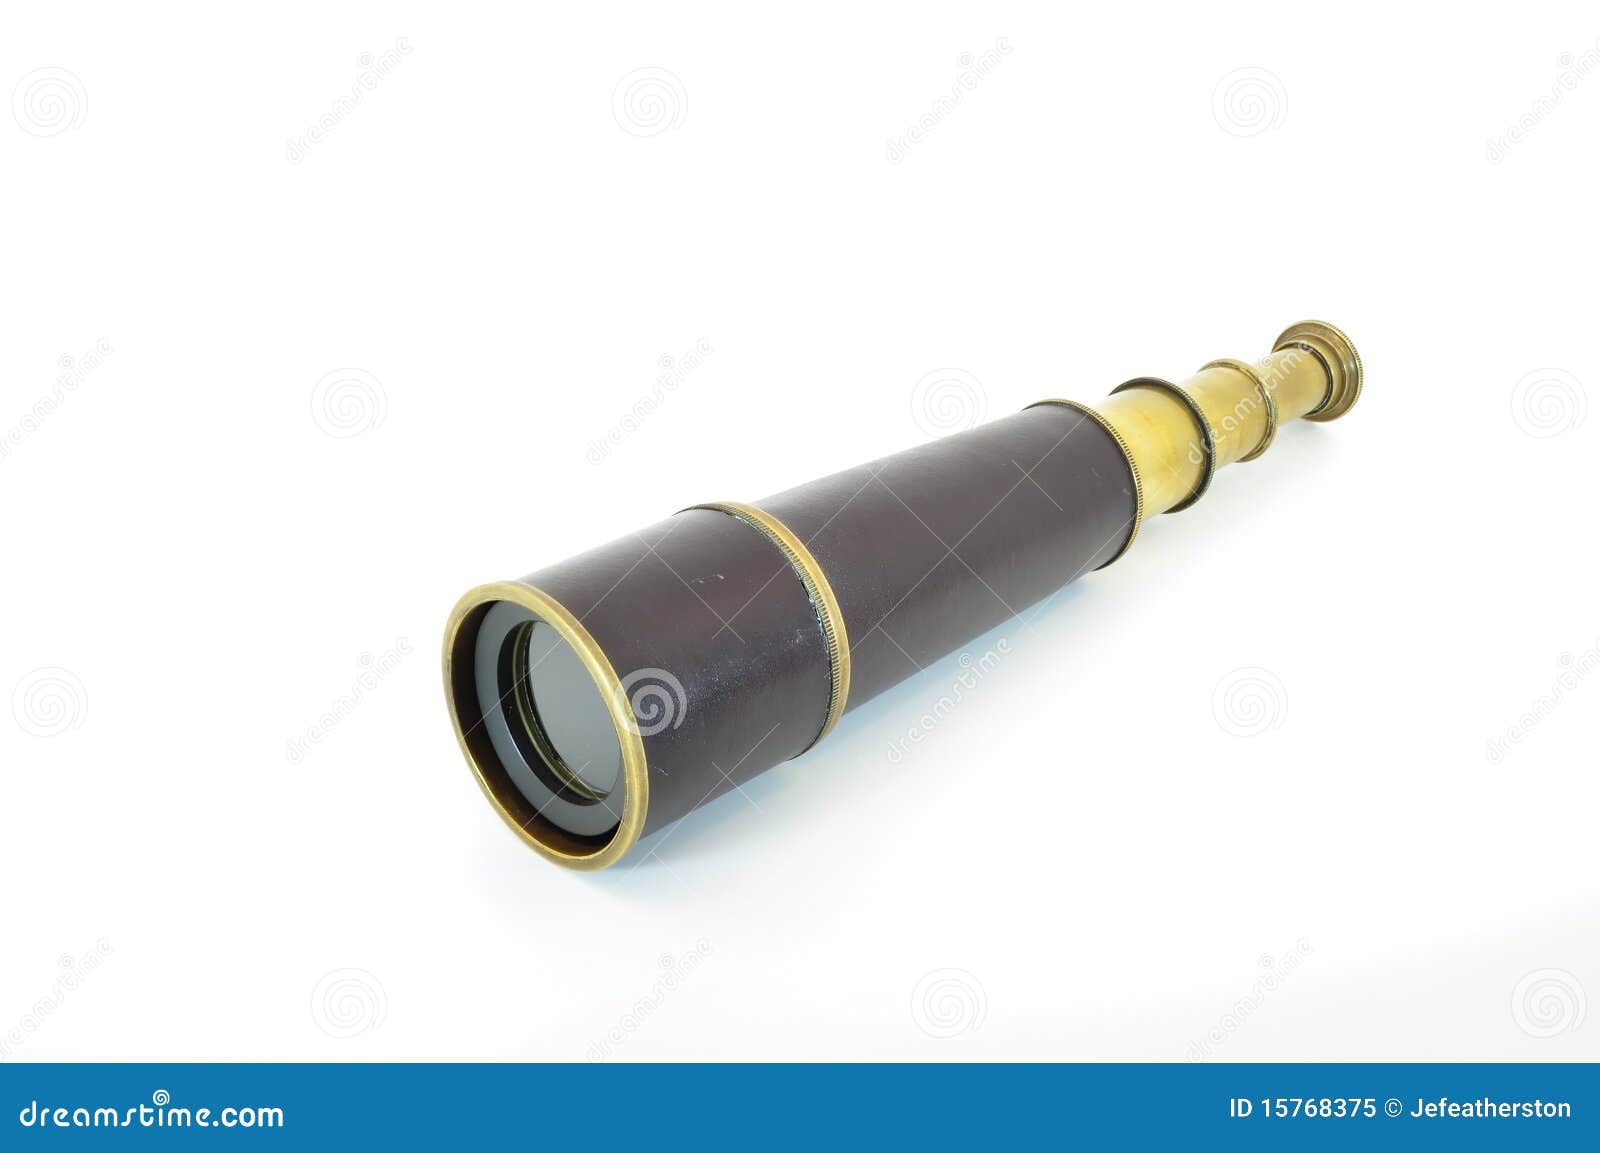 telescope brass